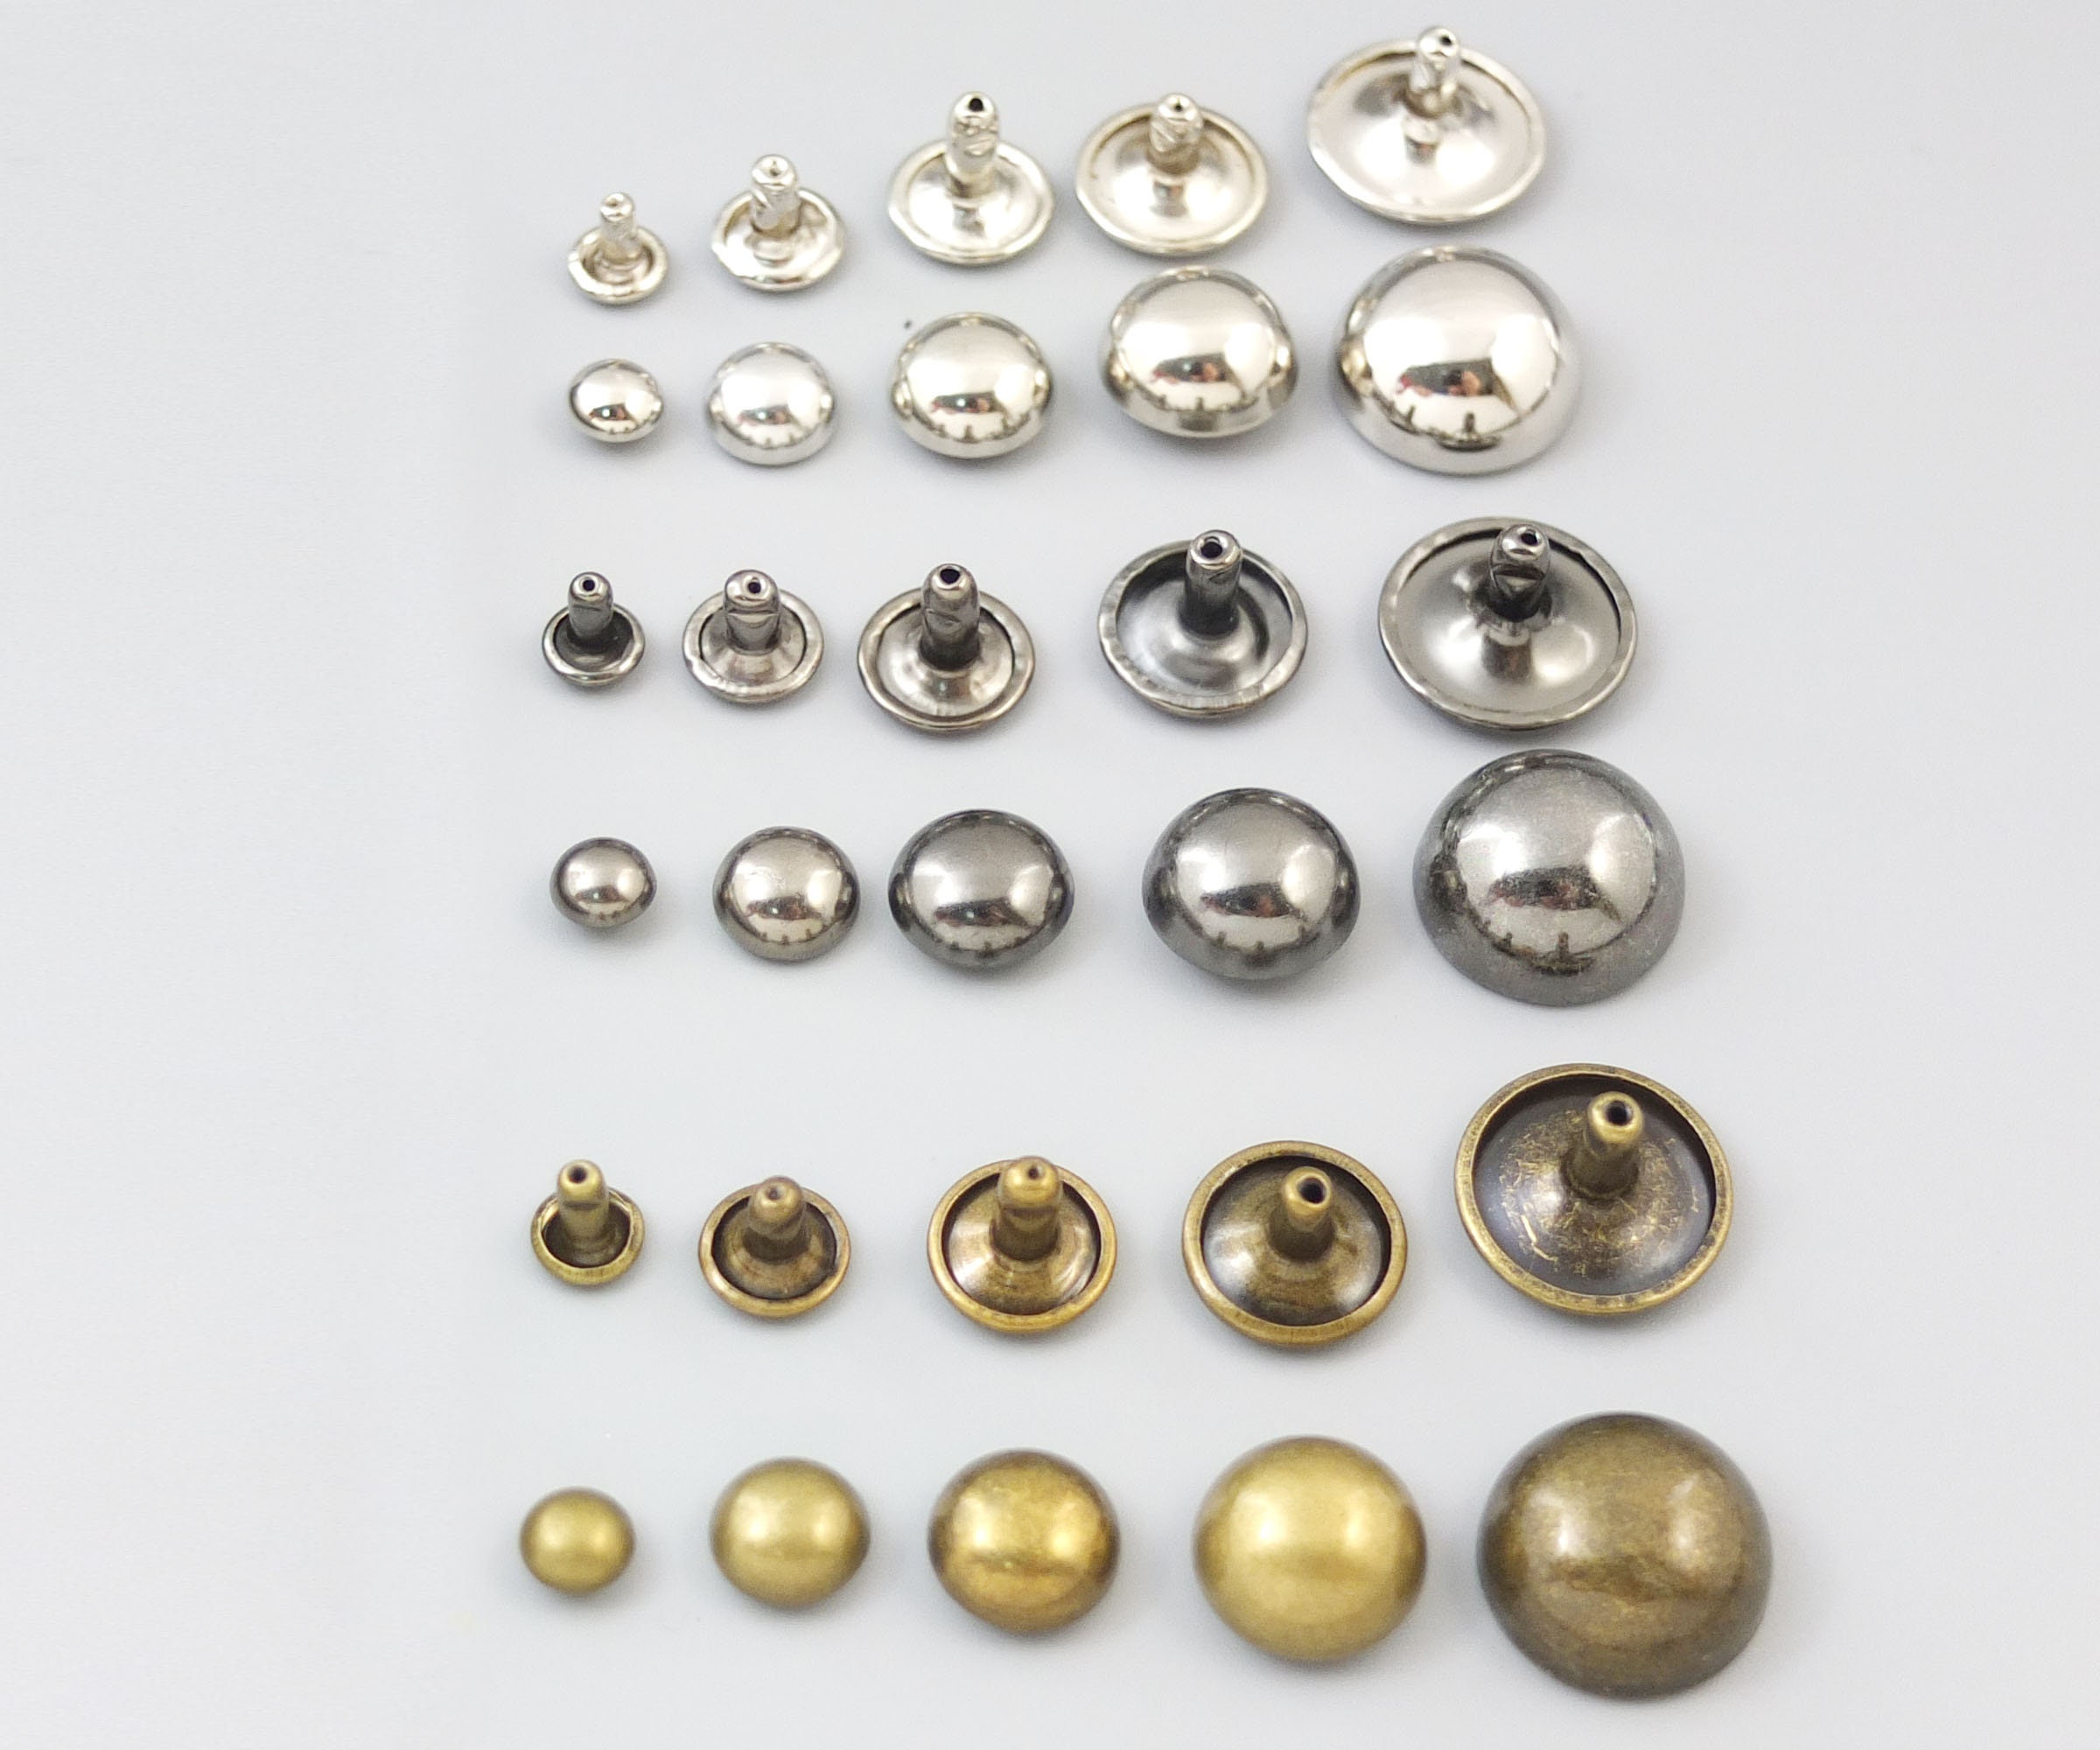 Brass/Copper Semi-Tubular/Pipe Rivets for Leather - China Semi